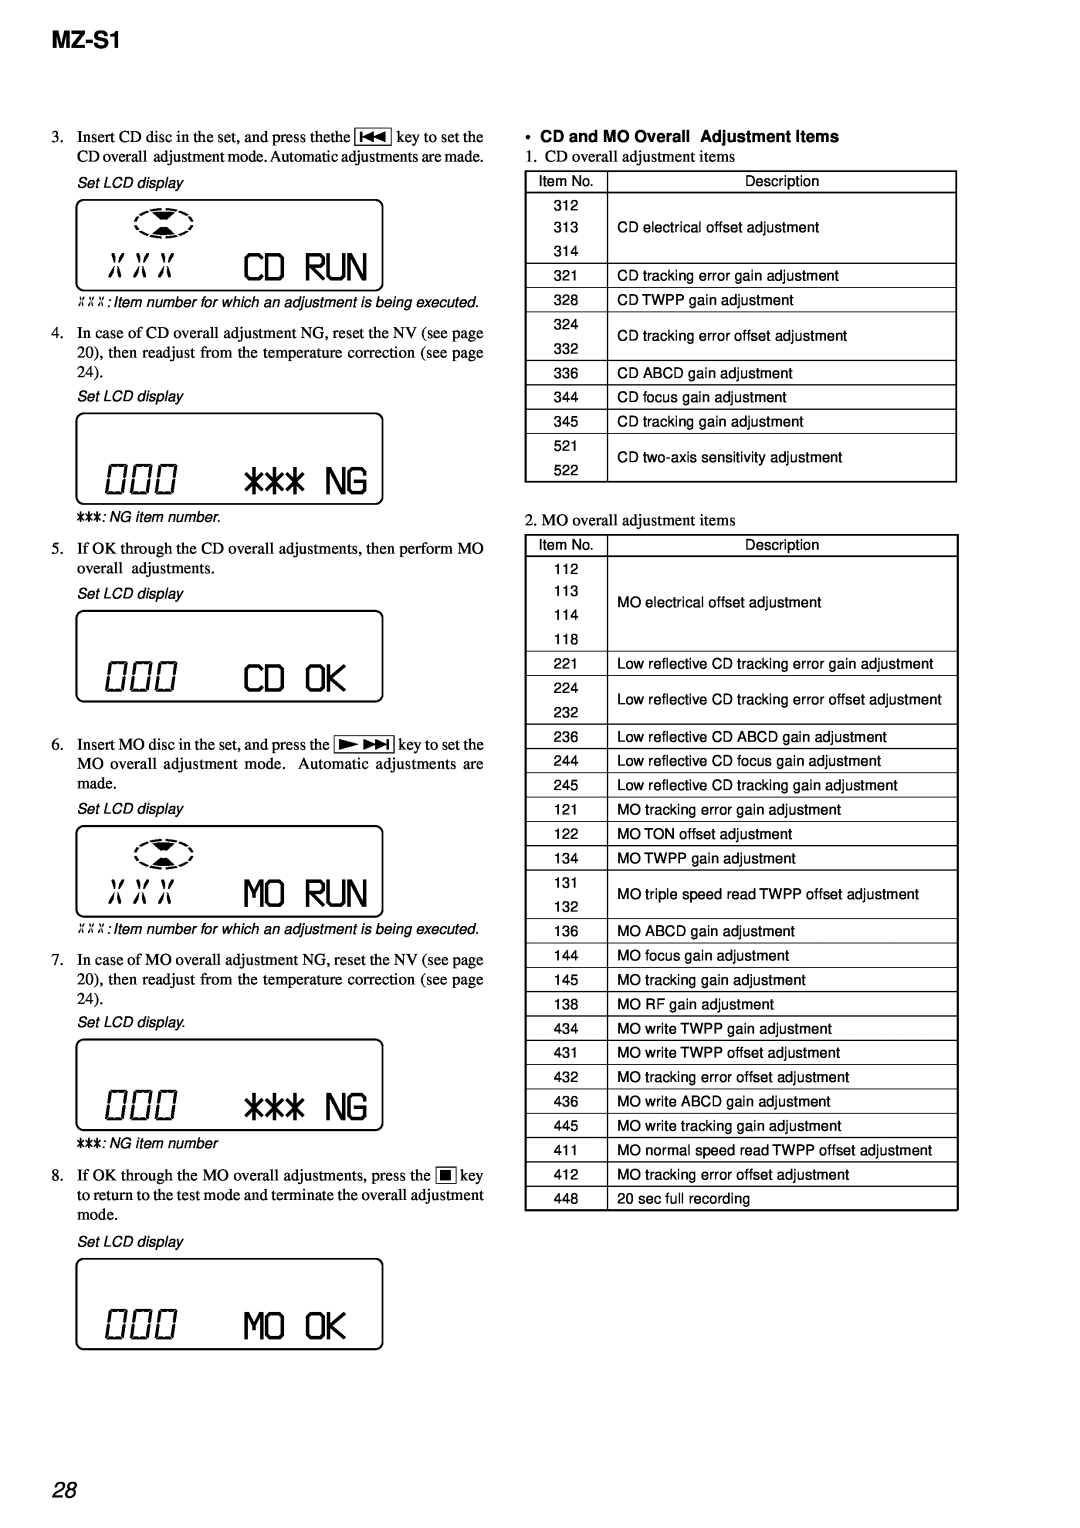 Sony MZ-S1 service manual Xxxcd Run, 000*** NG, 000CD OK, Xxxmo Run, 000MO OK, CD and MO Overall Adjustment Items 